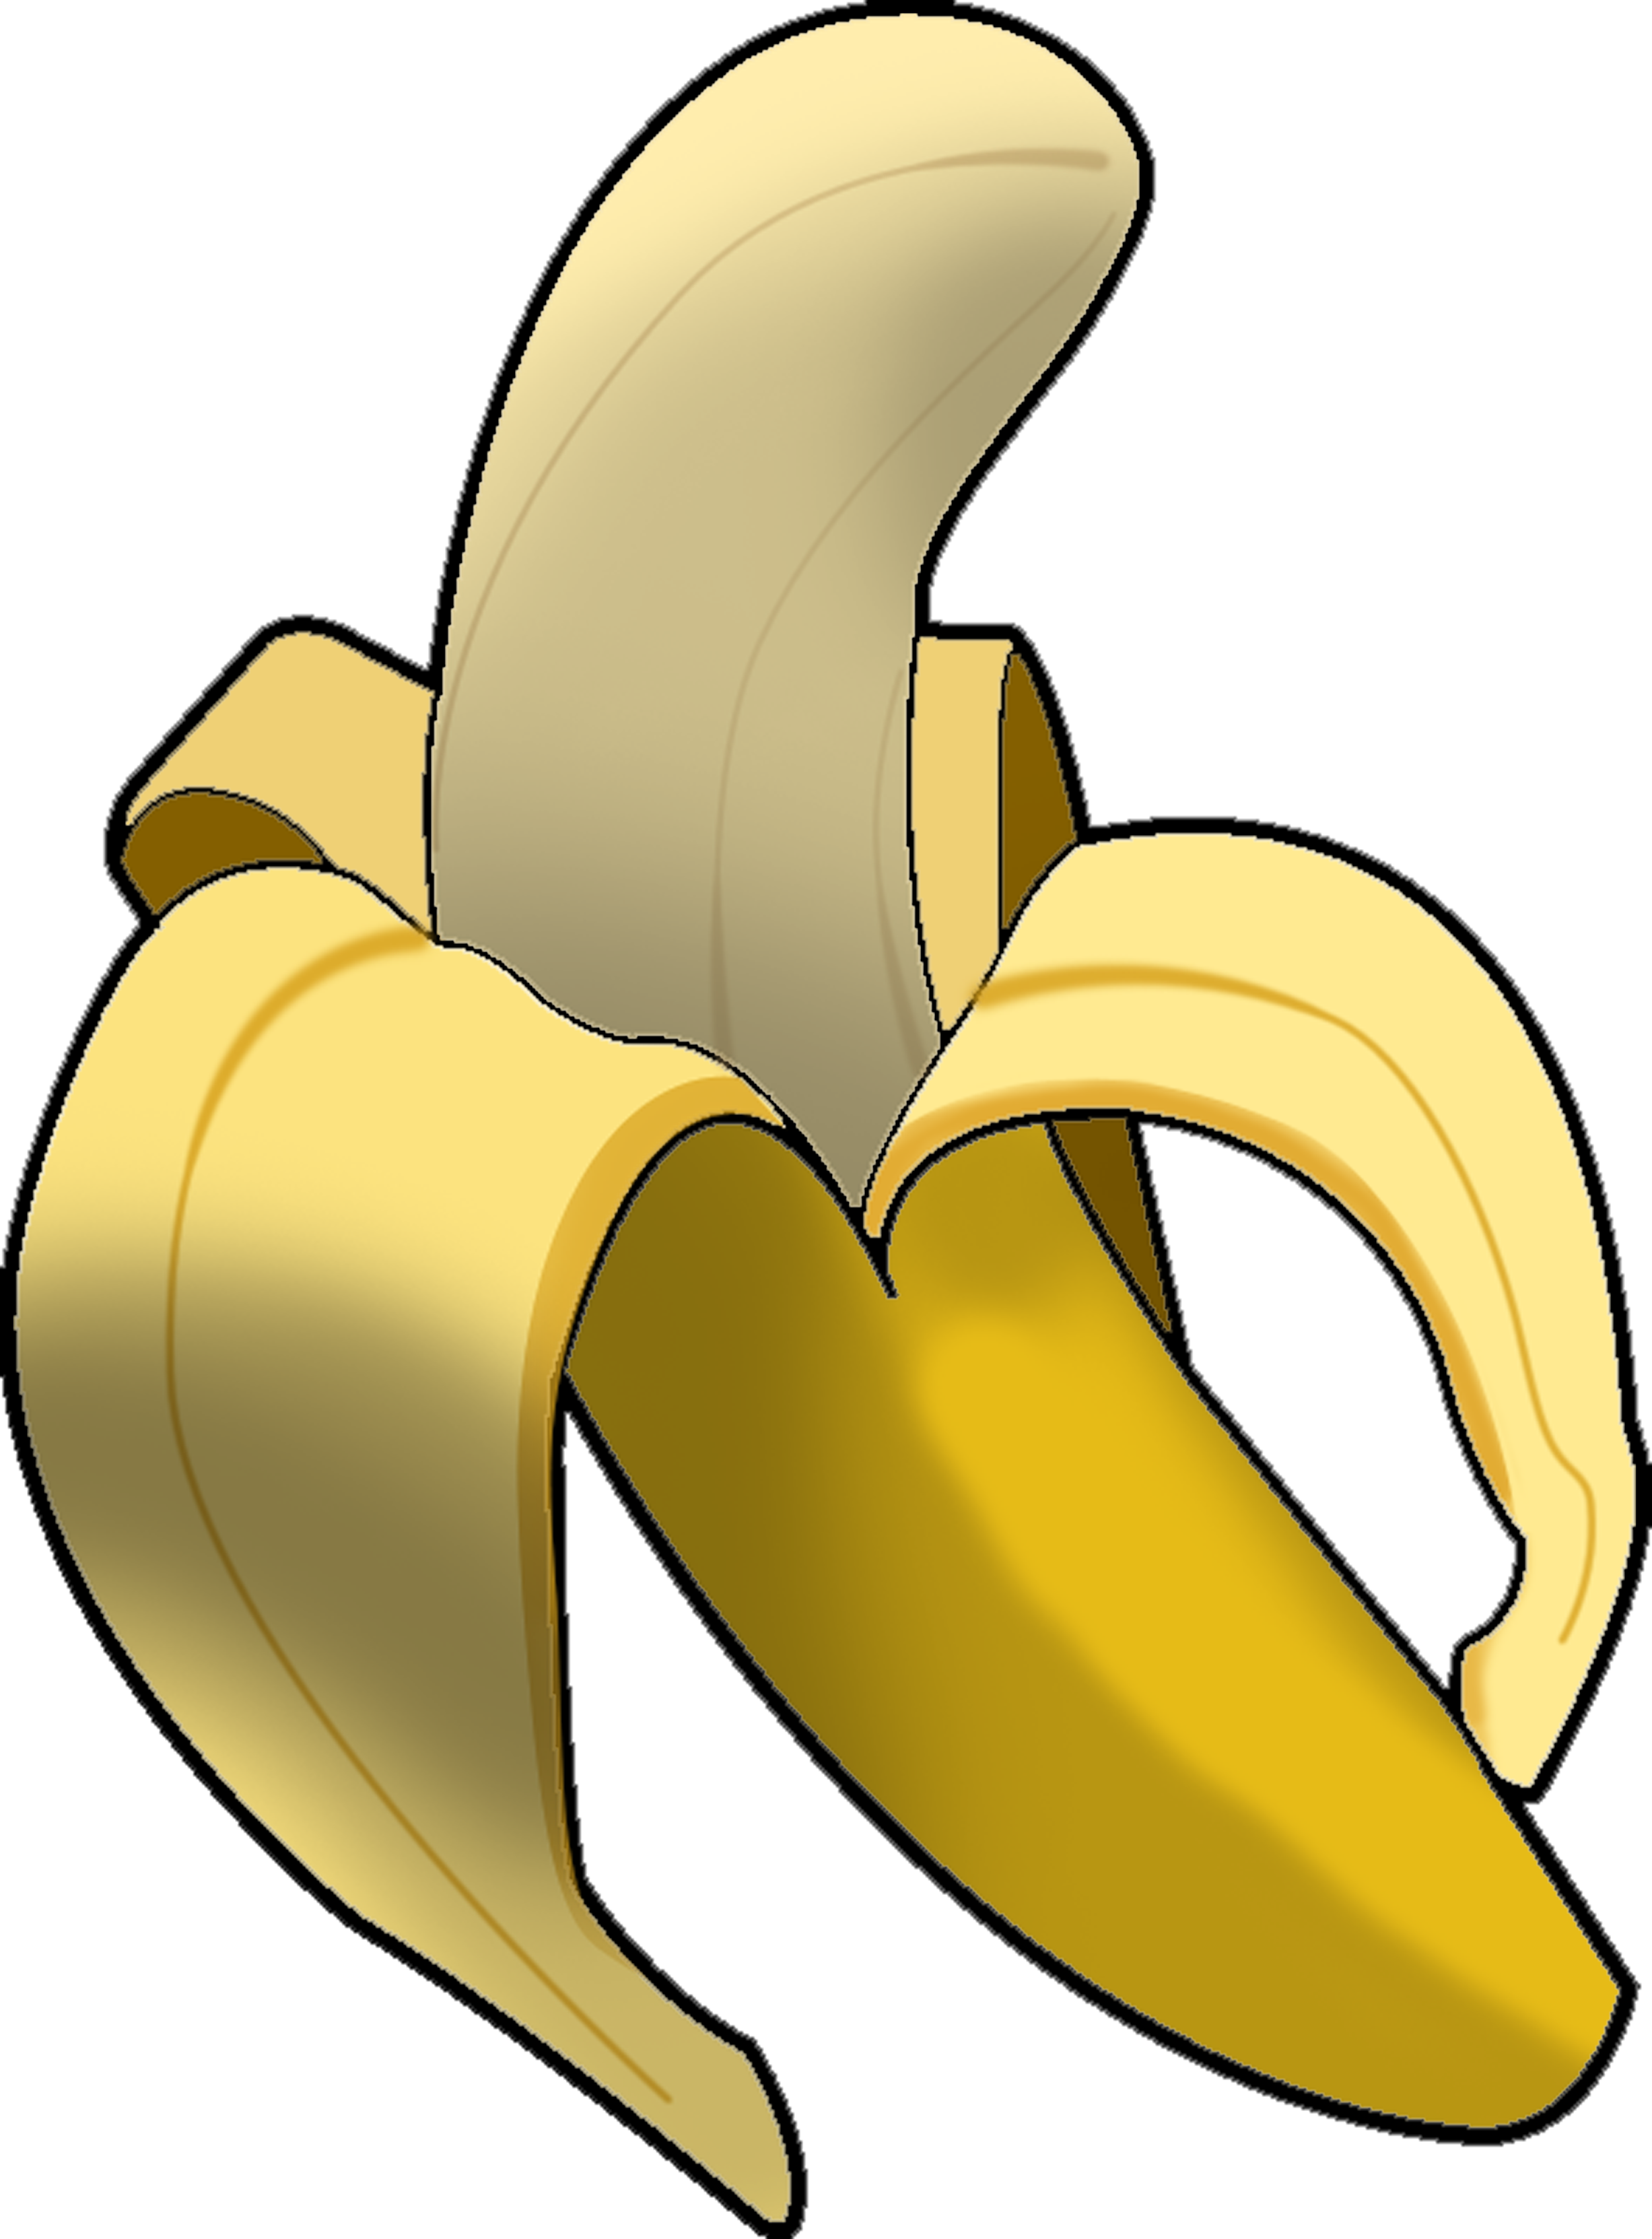 Cartoon Bananas - Clipart library